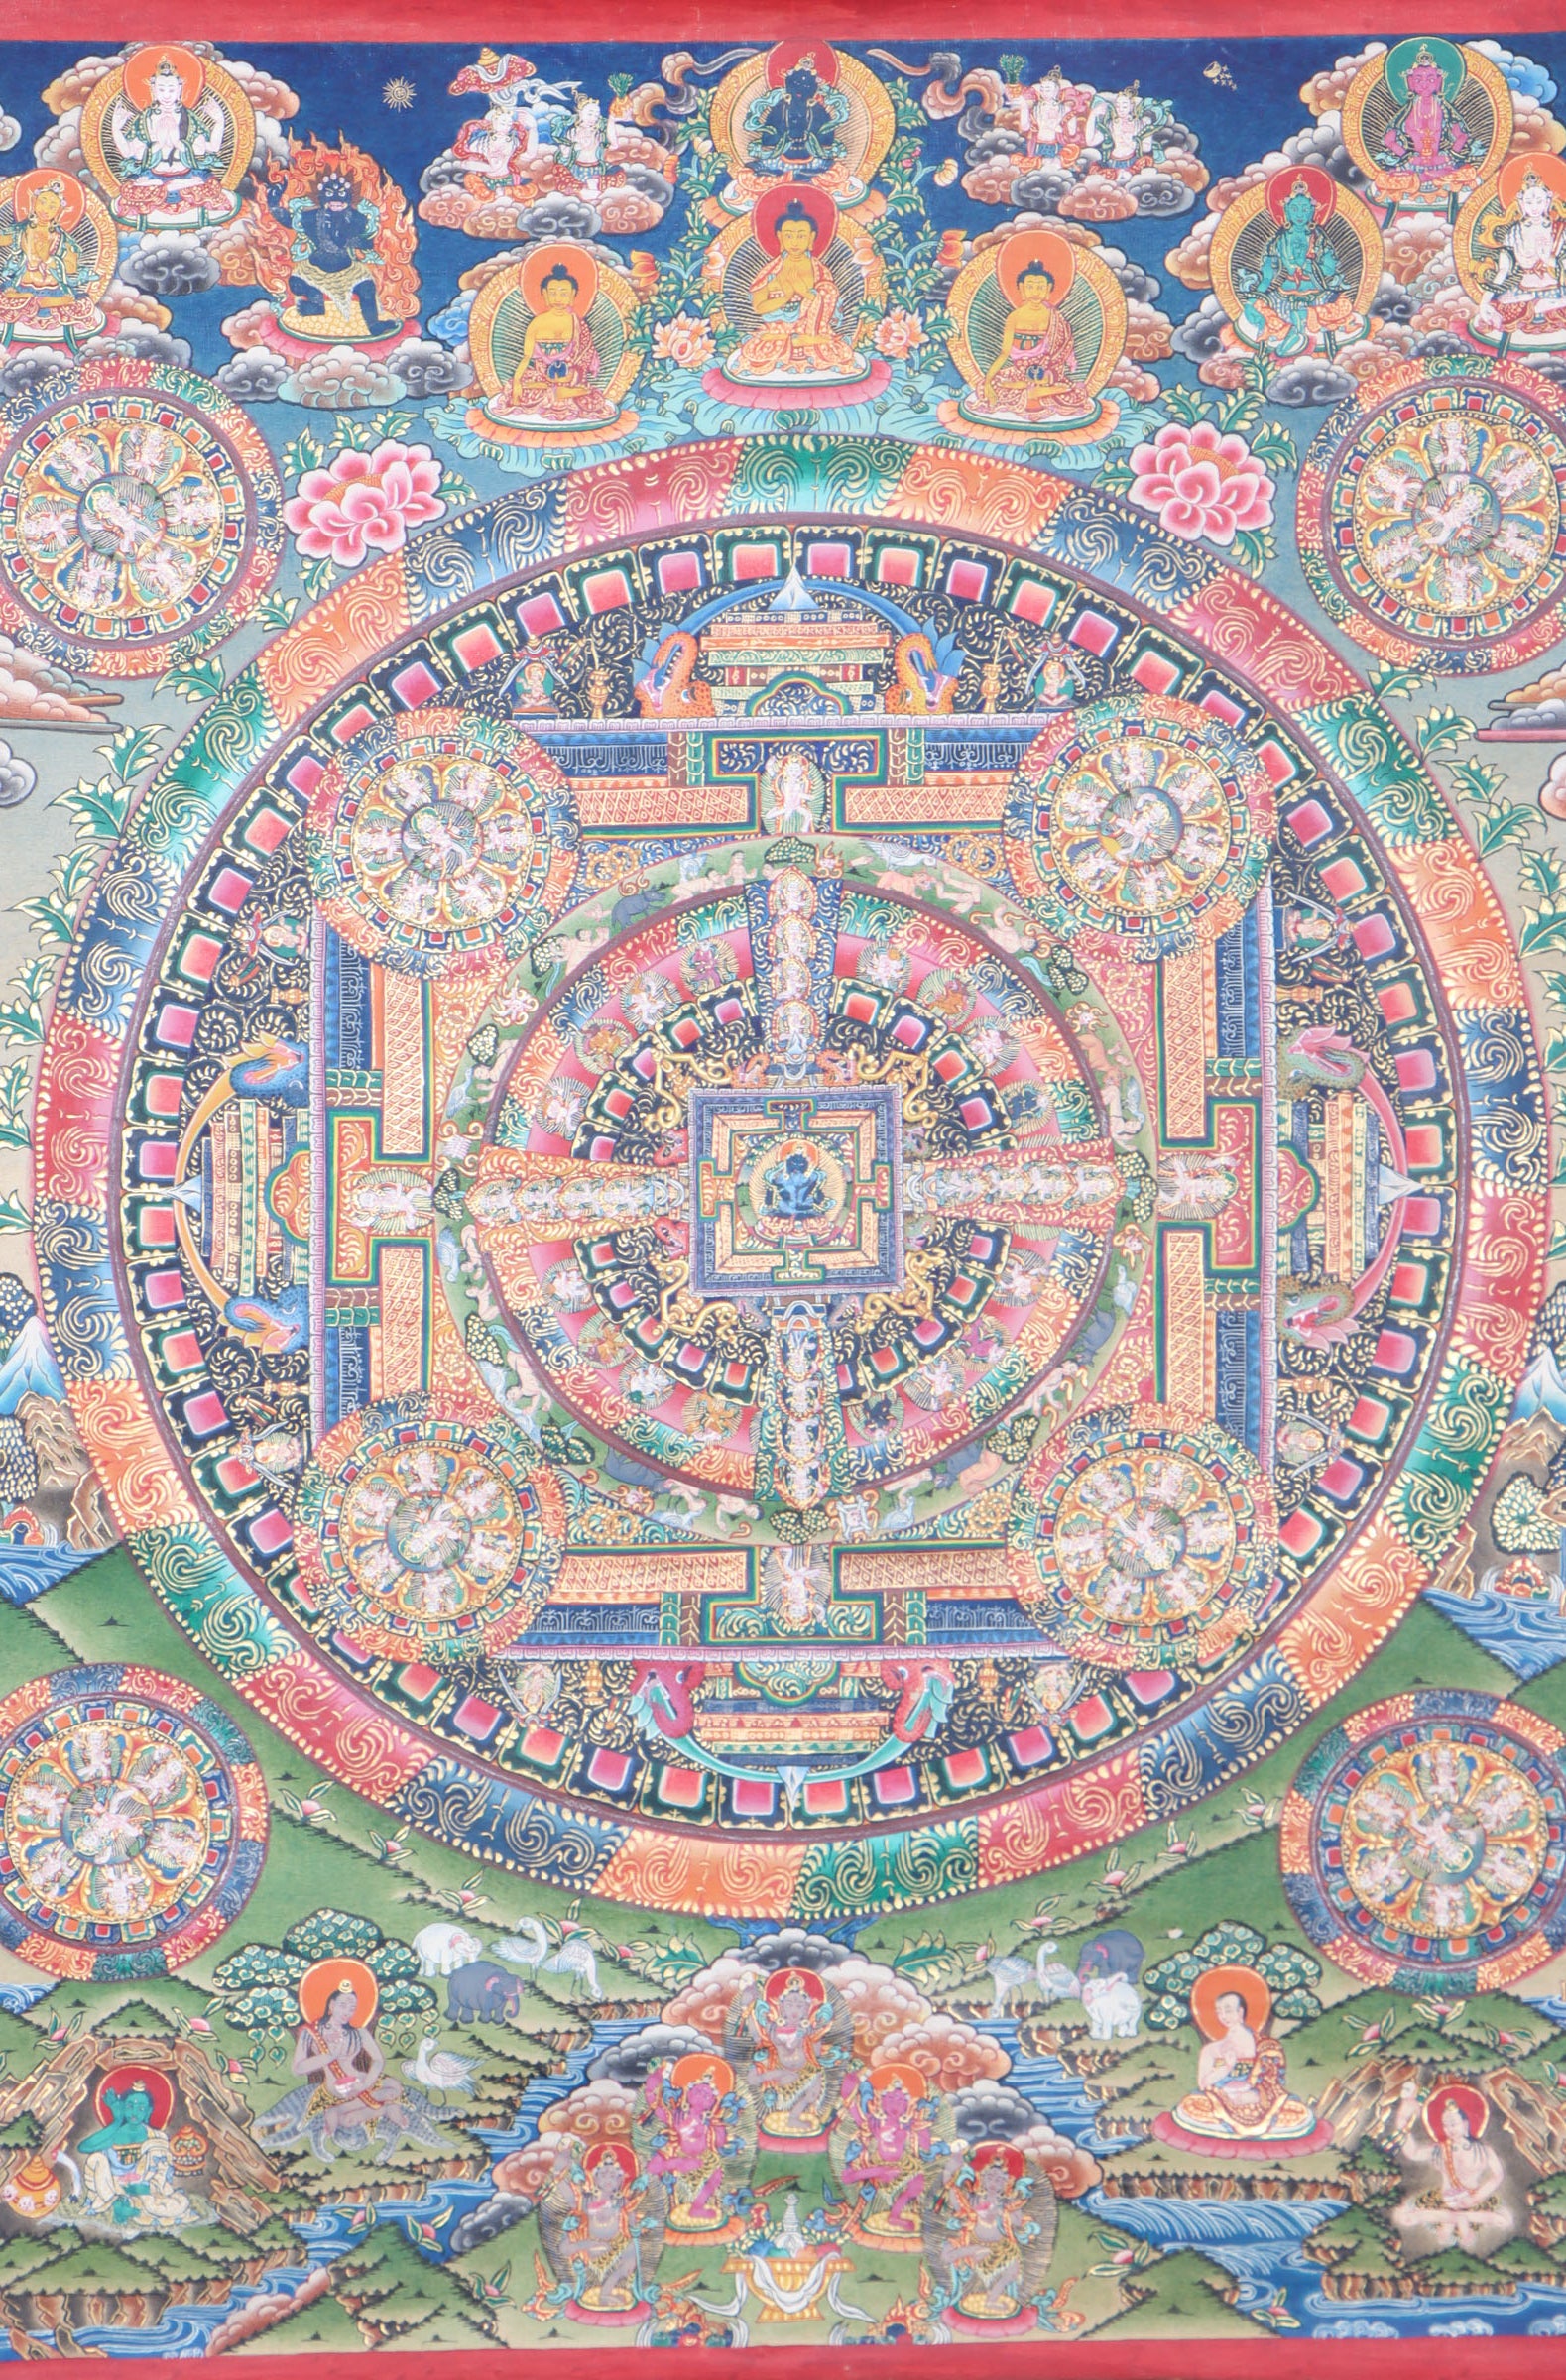  Vajradhara Mandala Thangka serves as a visual illustration to focus meditation and contemplation around the idea of enlightenment.